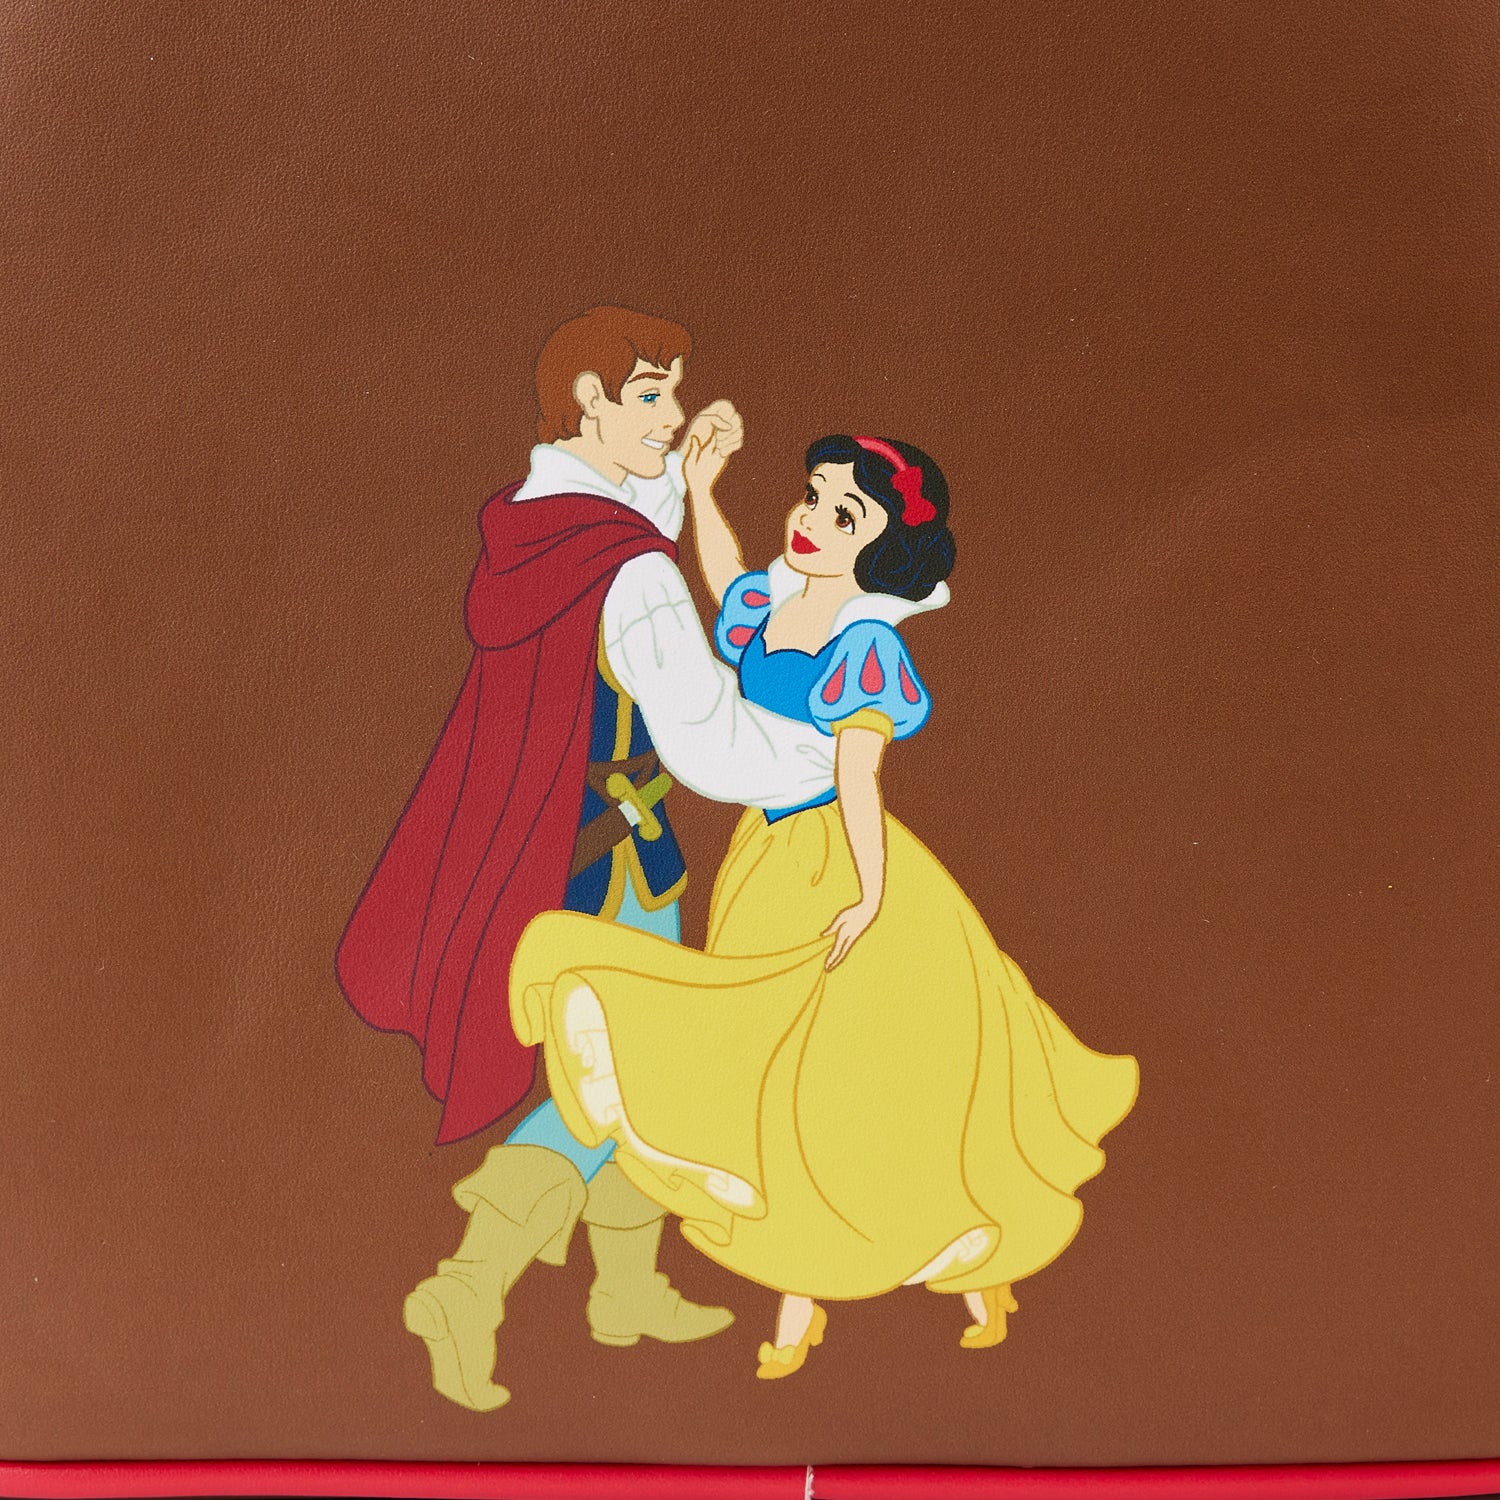 Loungefly Disney Princess Icons Mini Backpack